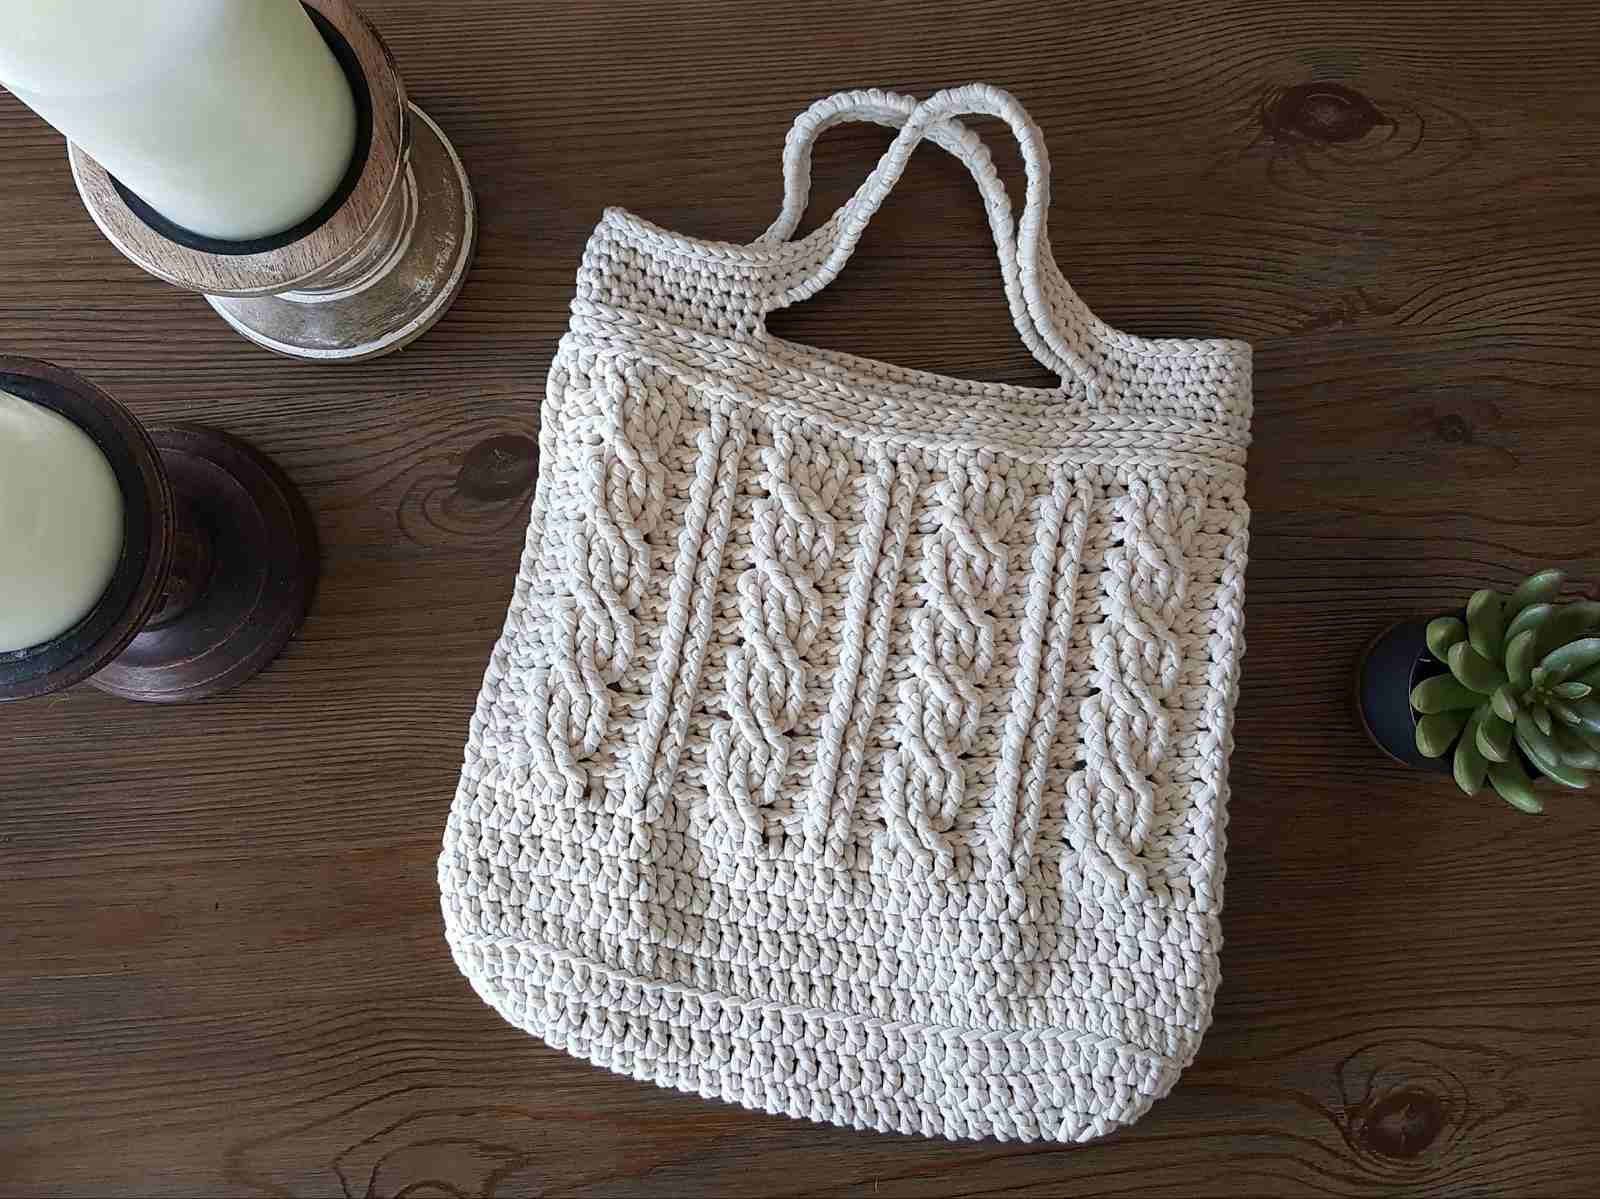 Designer Crochet Bag Patterns 8 Creative Crochet Bag Patterns